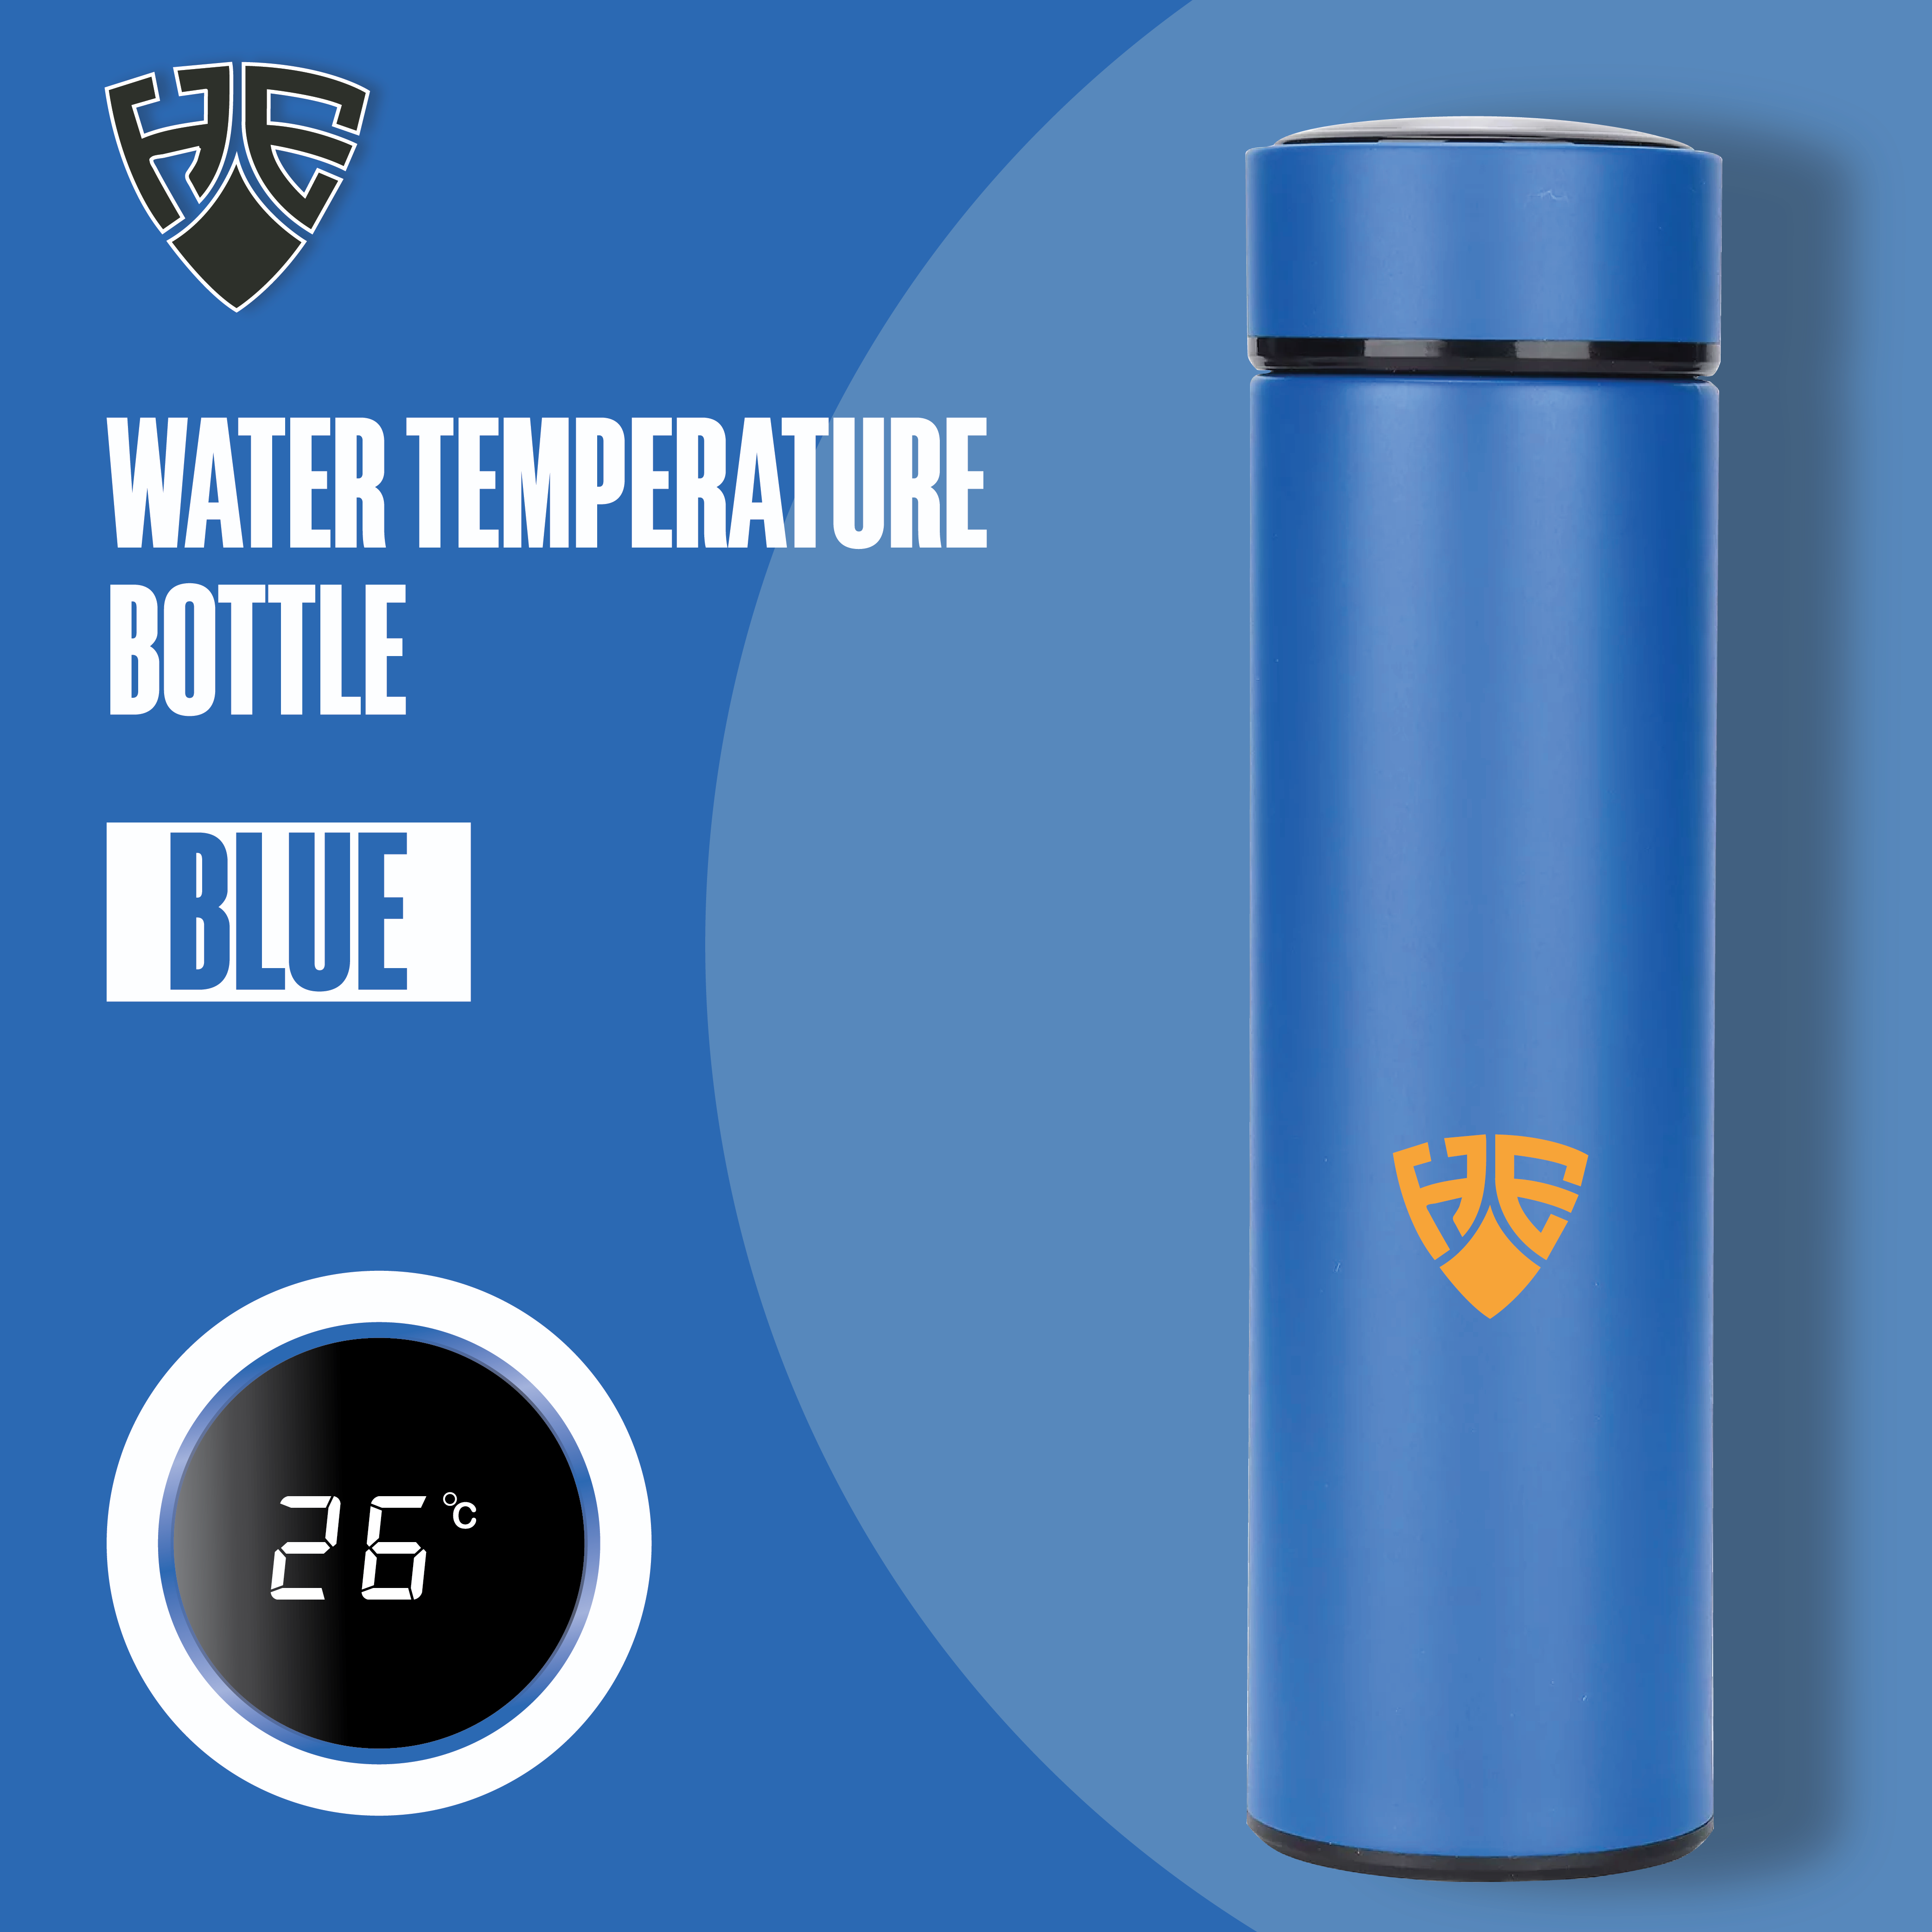 Temperature Sensor Smart Water Bottle